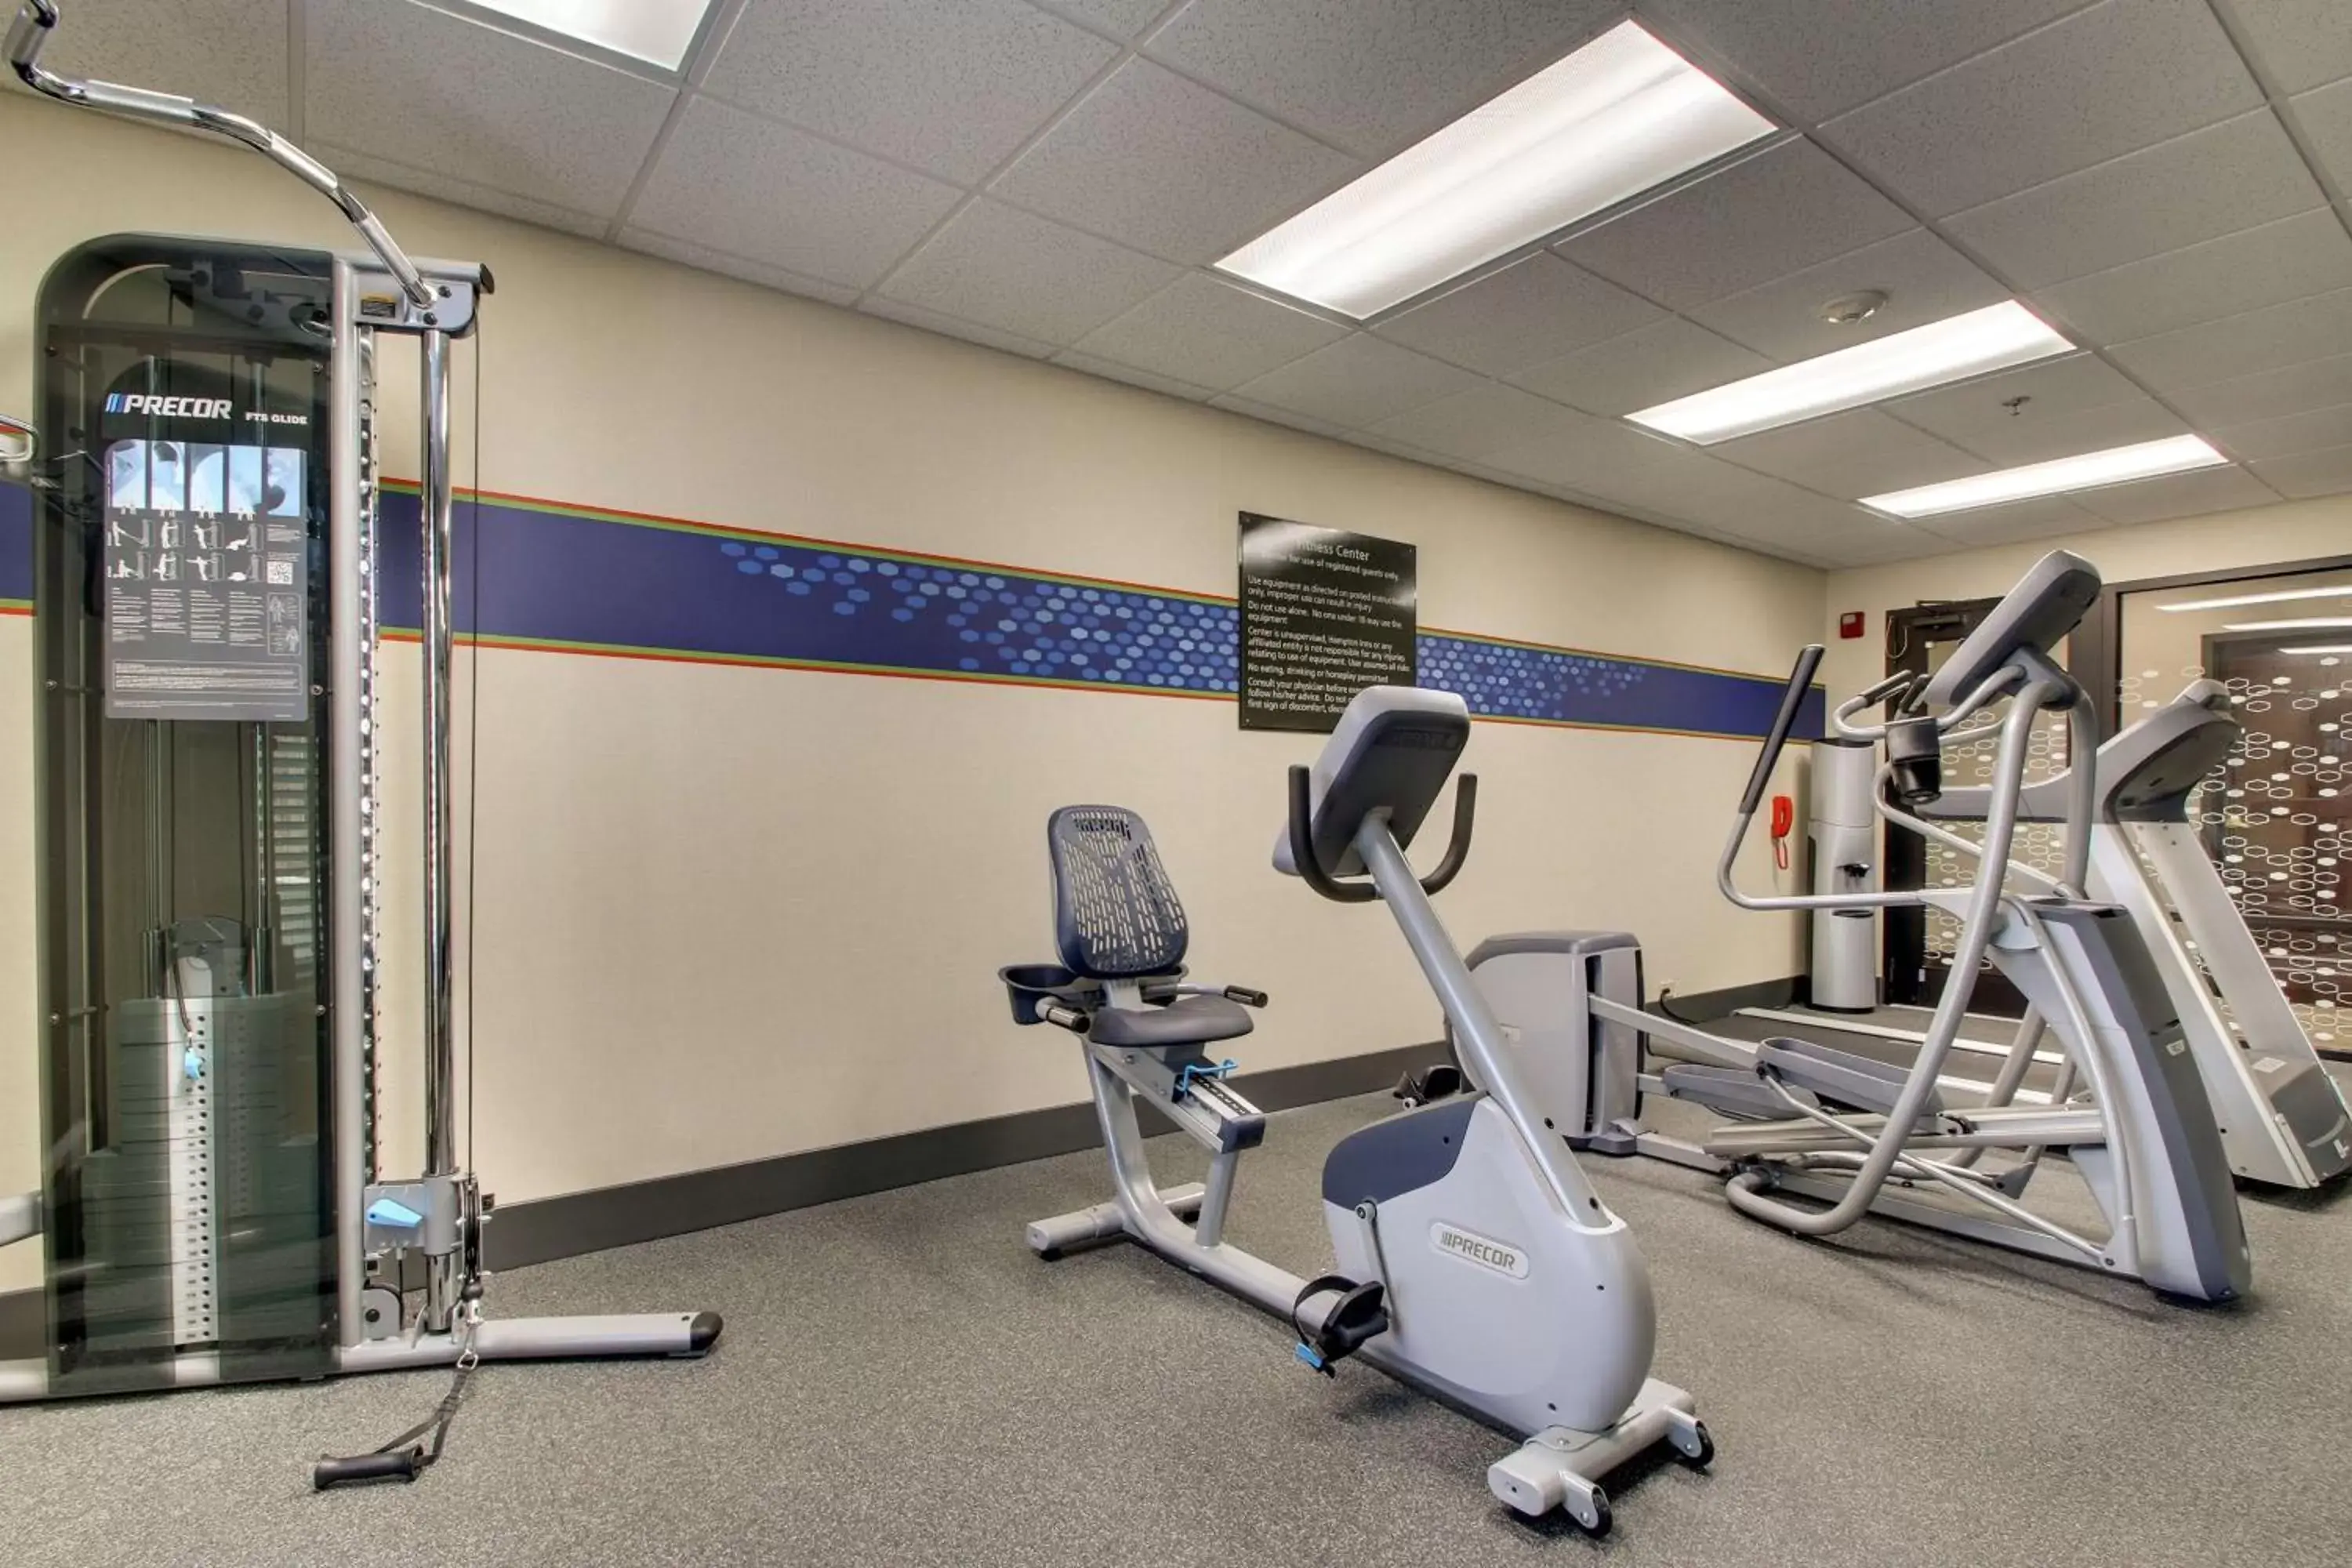 Fitness centre/facilities, Fitness Center/Facilities in Hampton Inn Yemassee/Point South, Sc